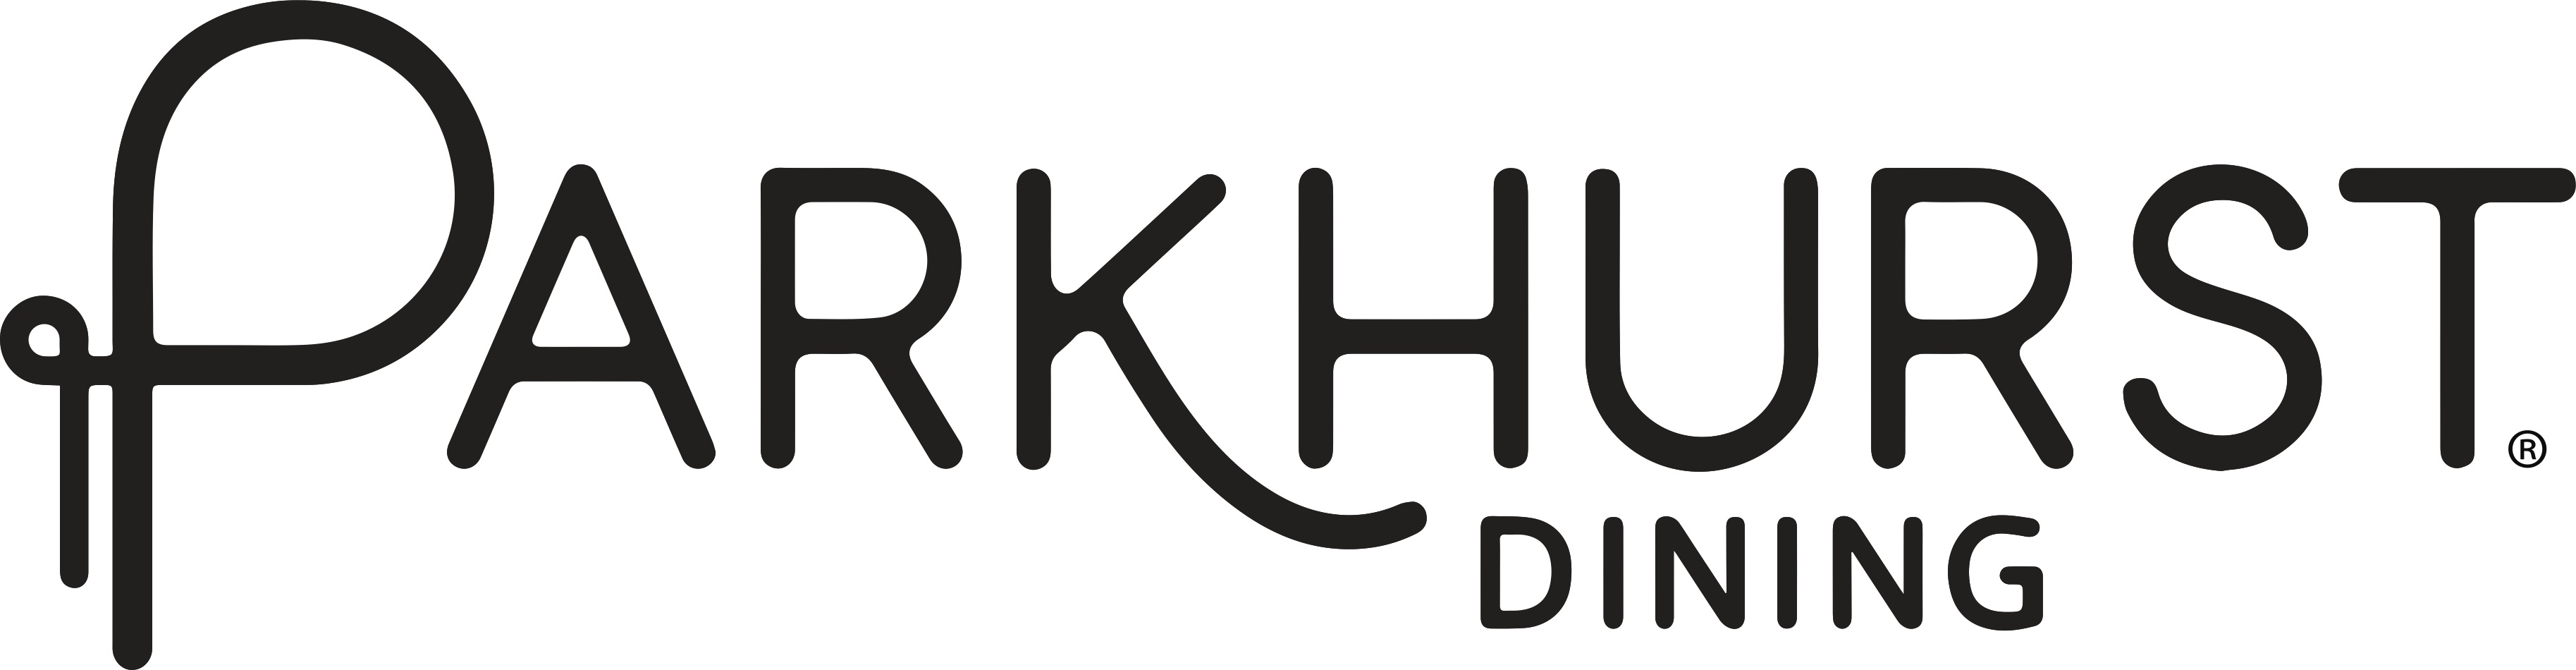 Parkhurst Dining Logo